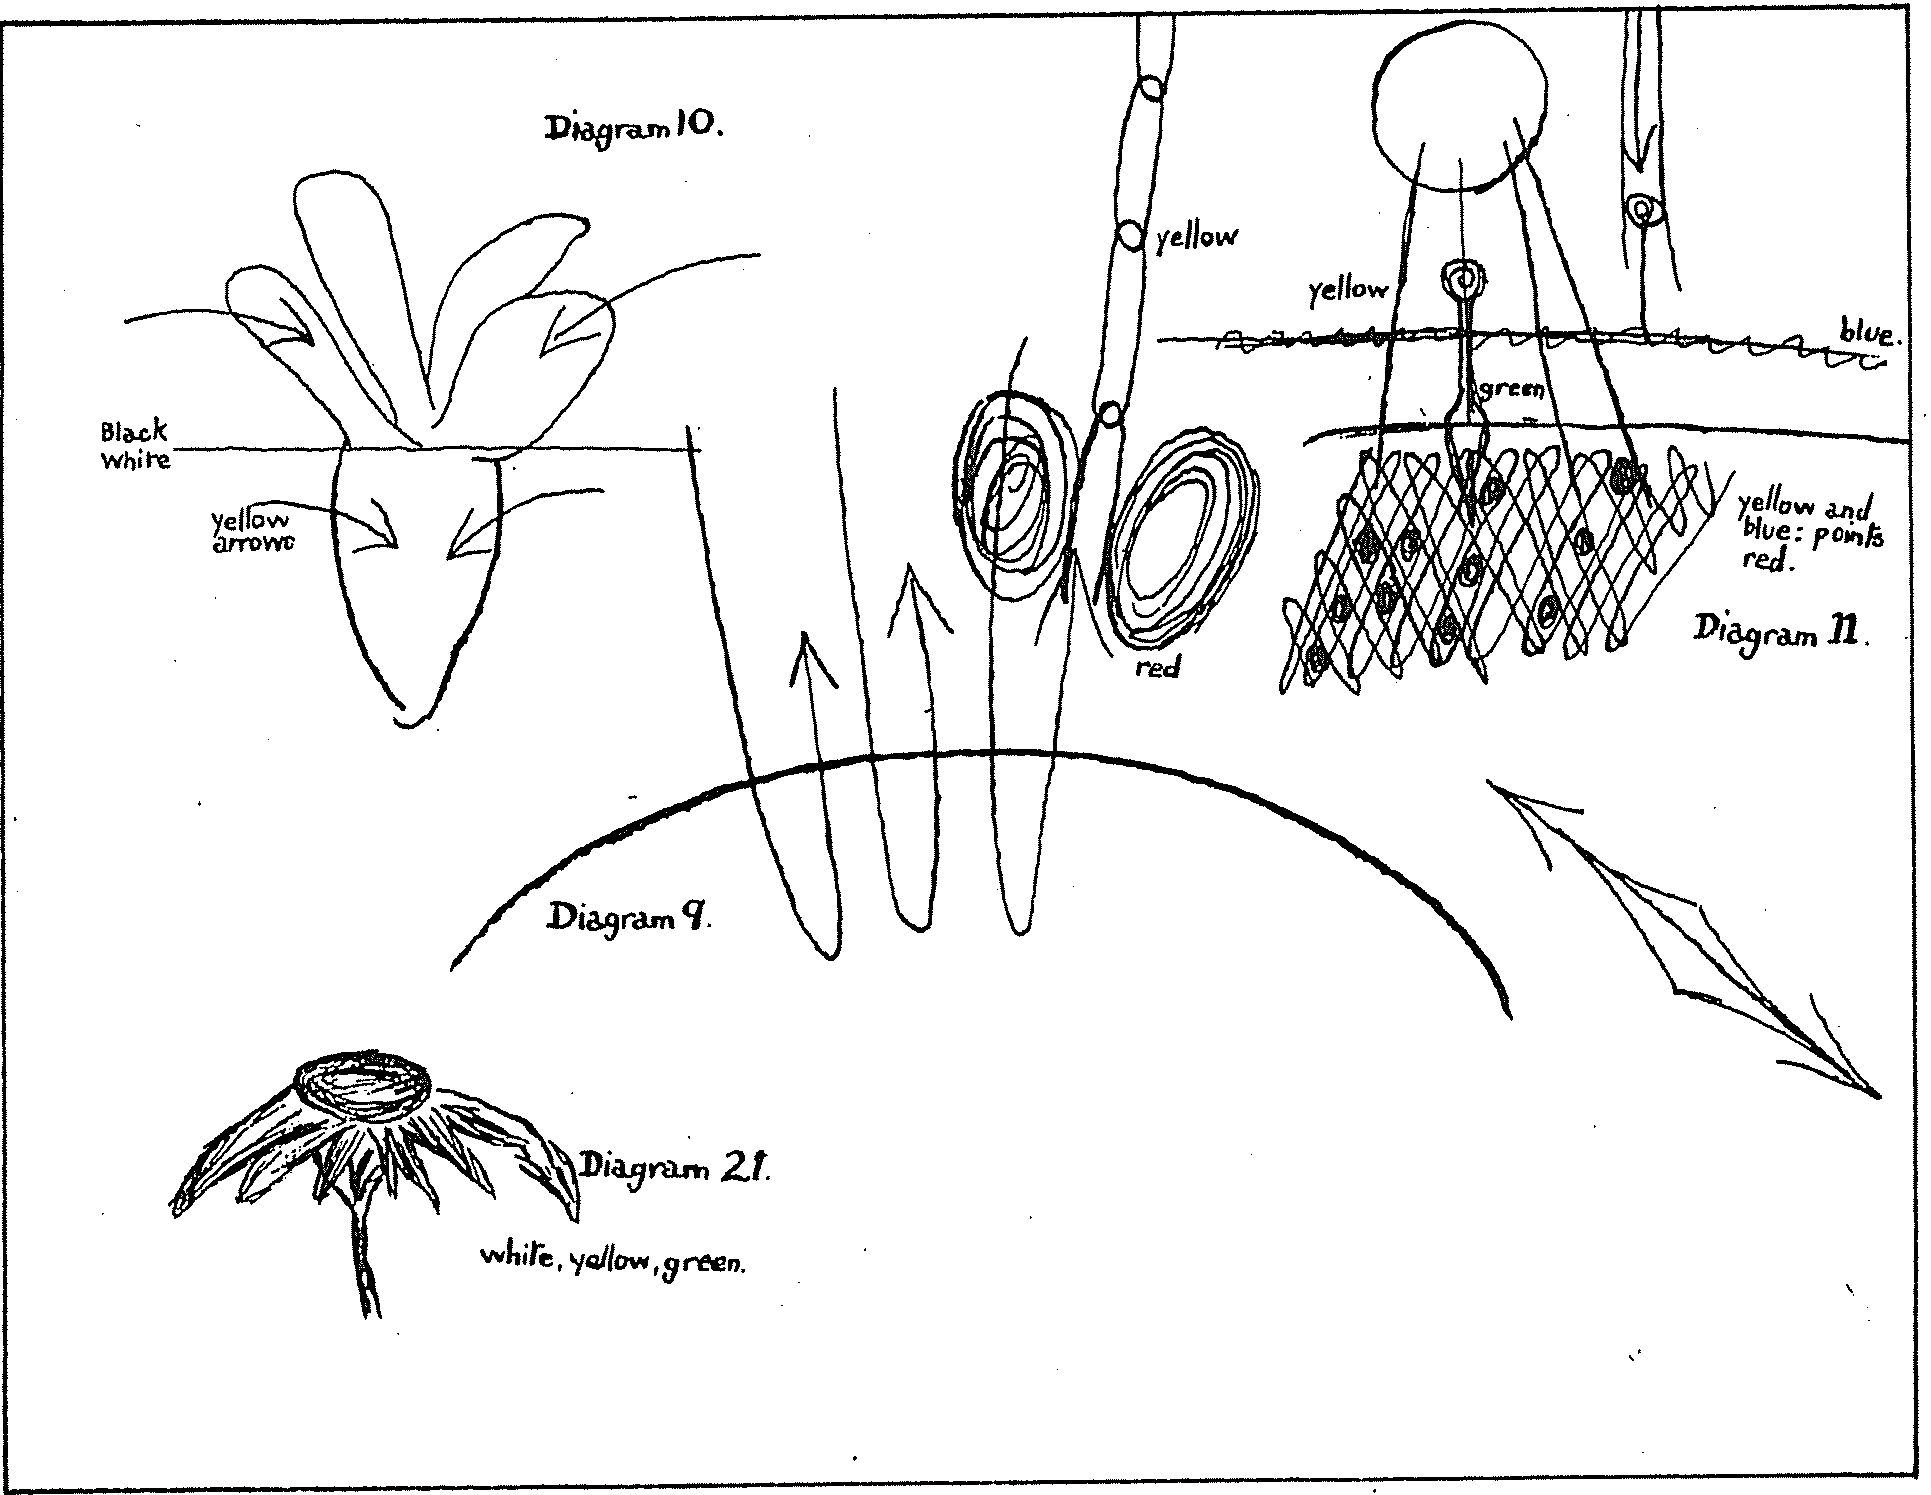 Diagram VI